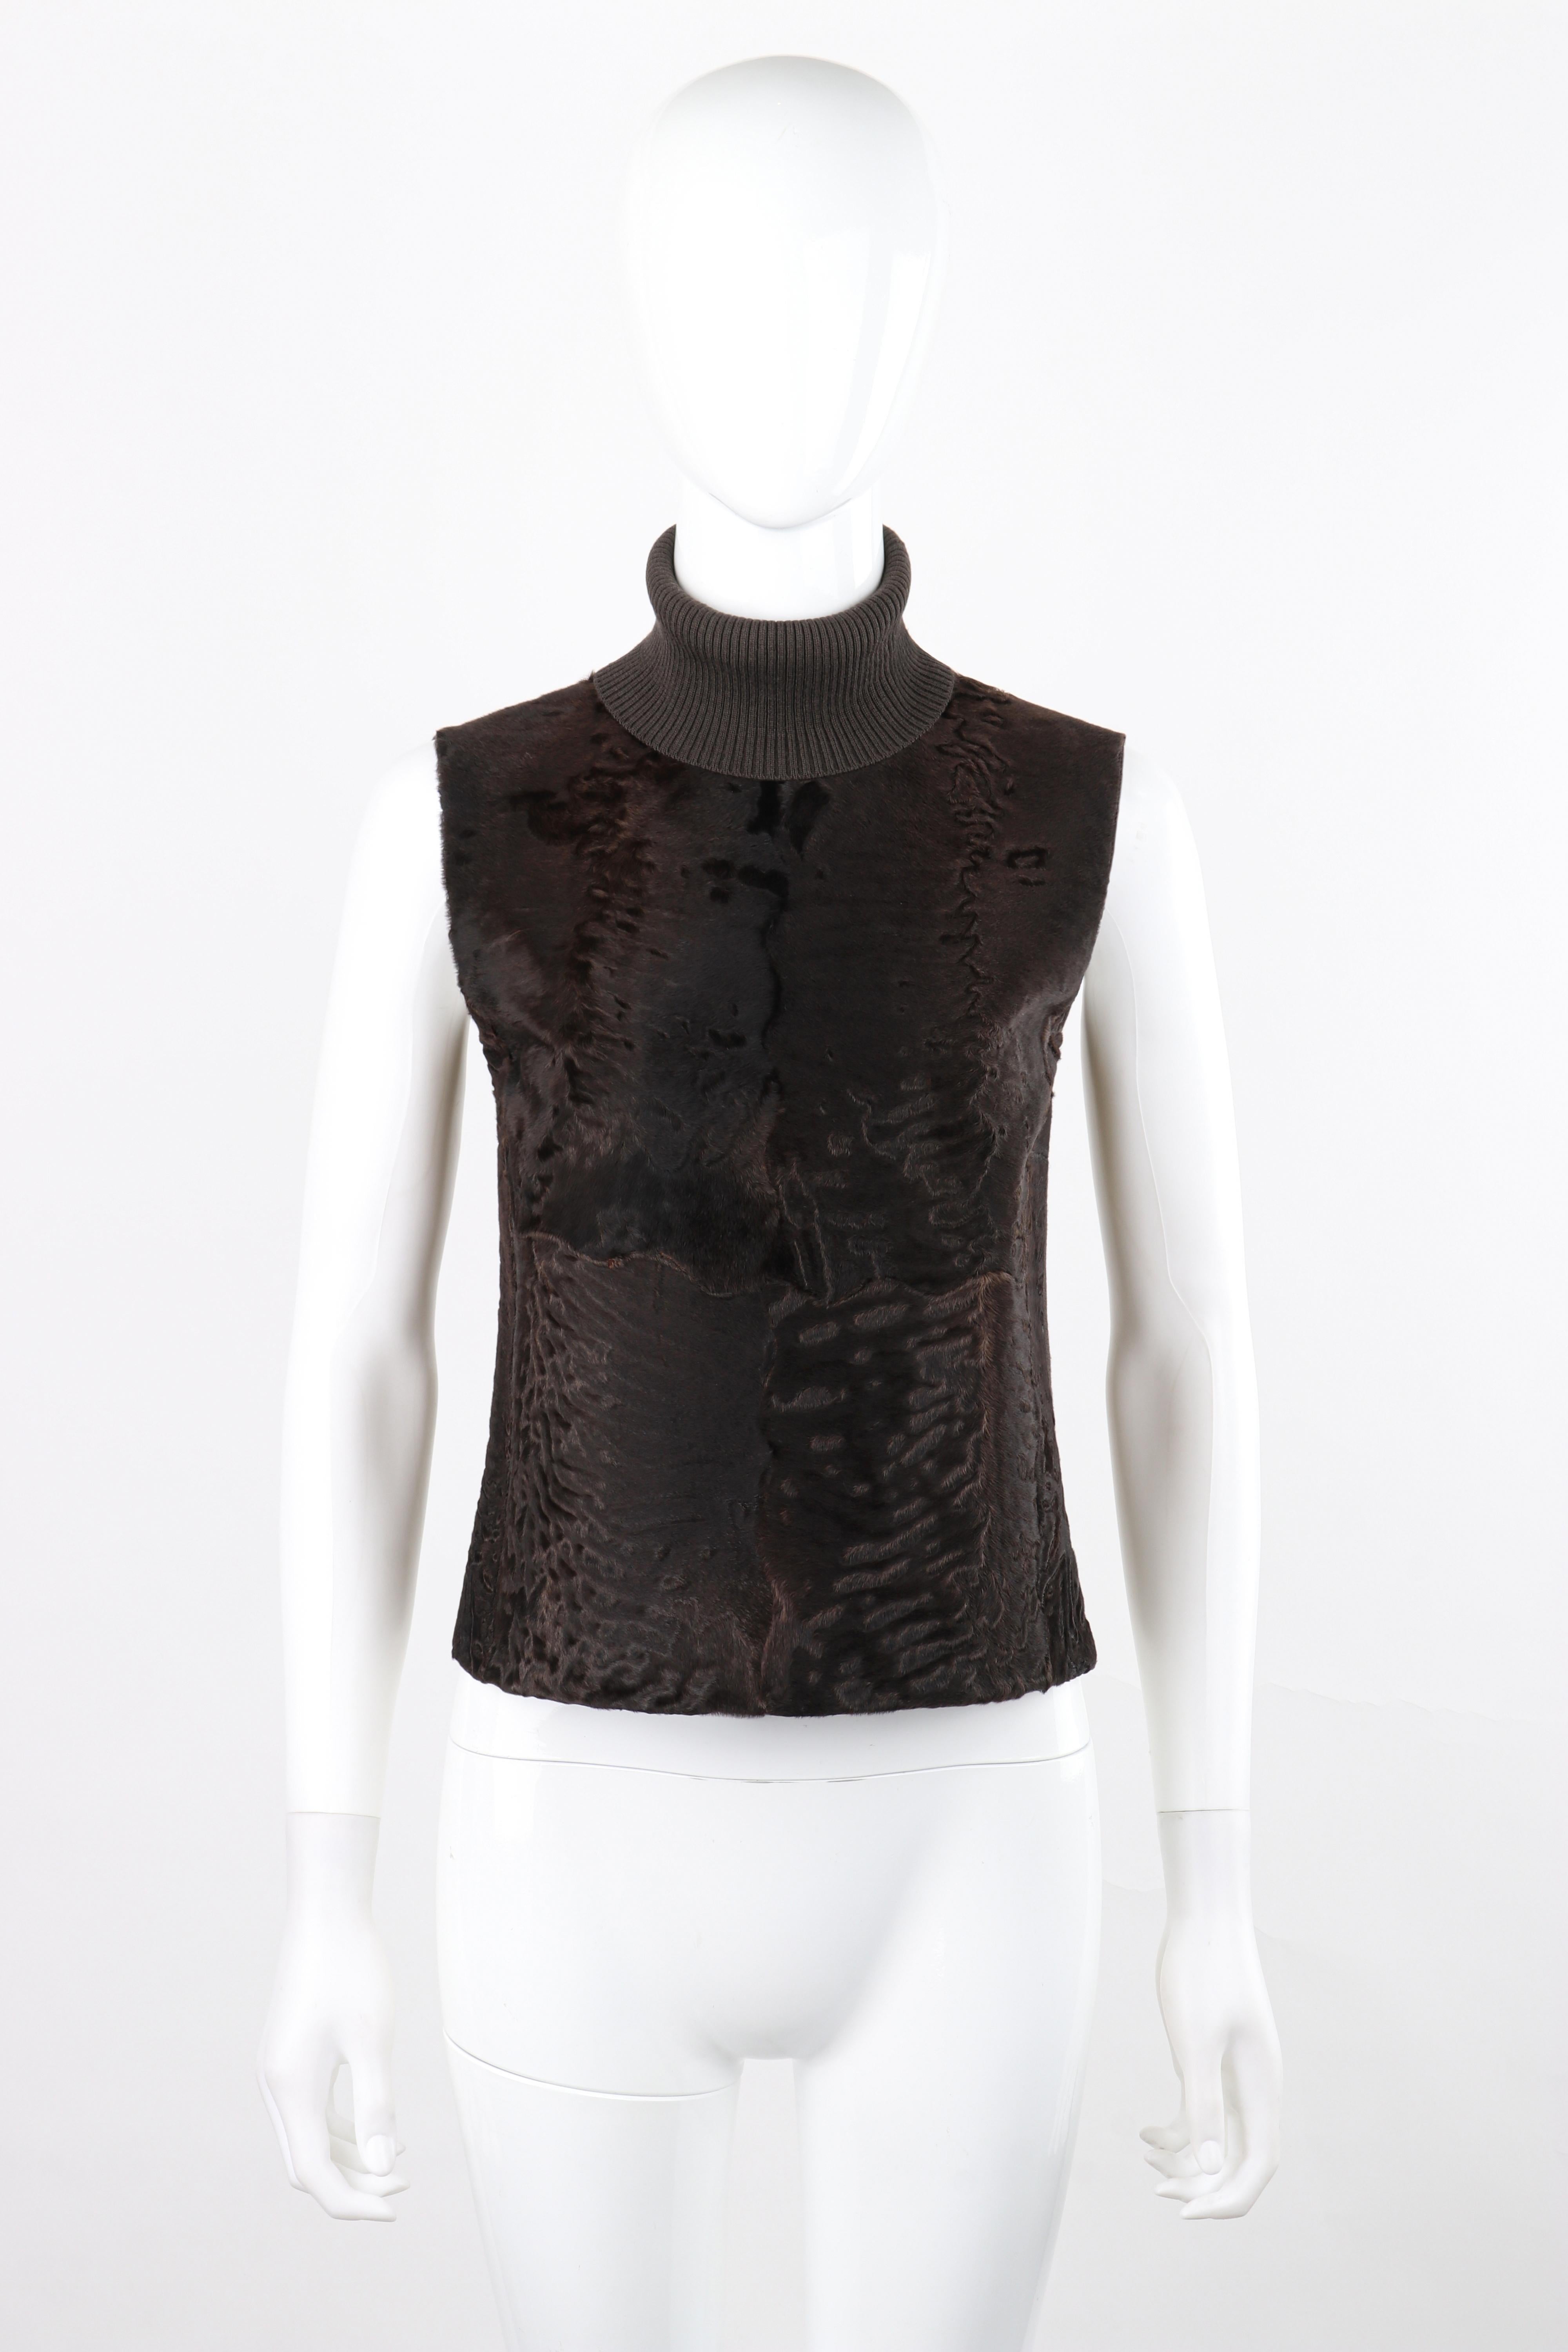 PRADA c.1990's Brown Knit Wool Dyed Fur Sleeveless Pullover Turtleneck Shirt Top

Brand / Manufacturer: Prada
Circa: 1990's
Designer: Miuccia Prada
Style: Turtleneck Top
Color(s): Dark Brown
Lined: Front (Yes), Back (No)
Marked Fabric: 